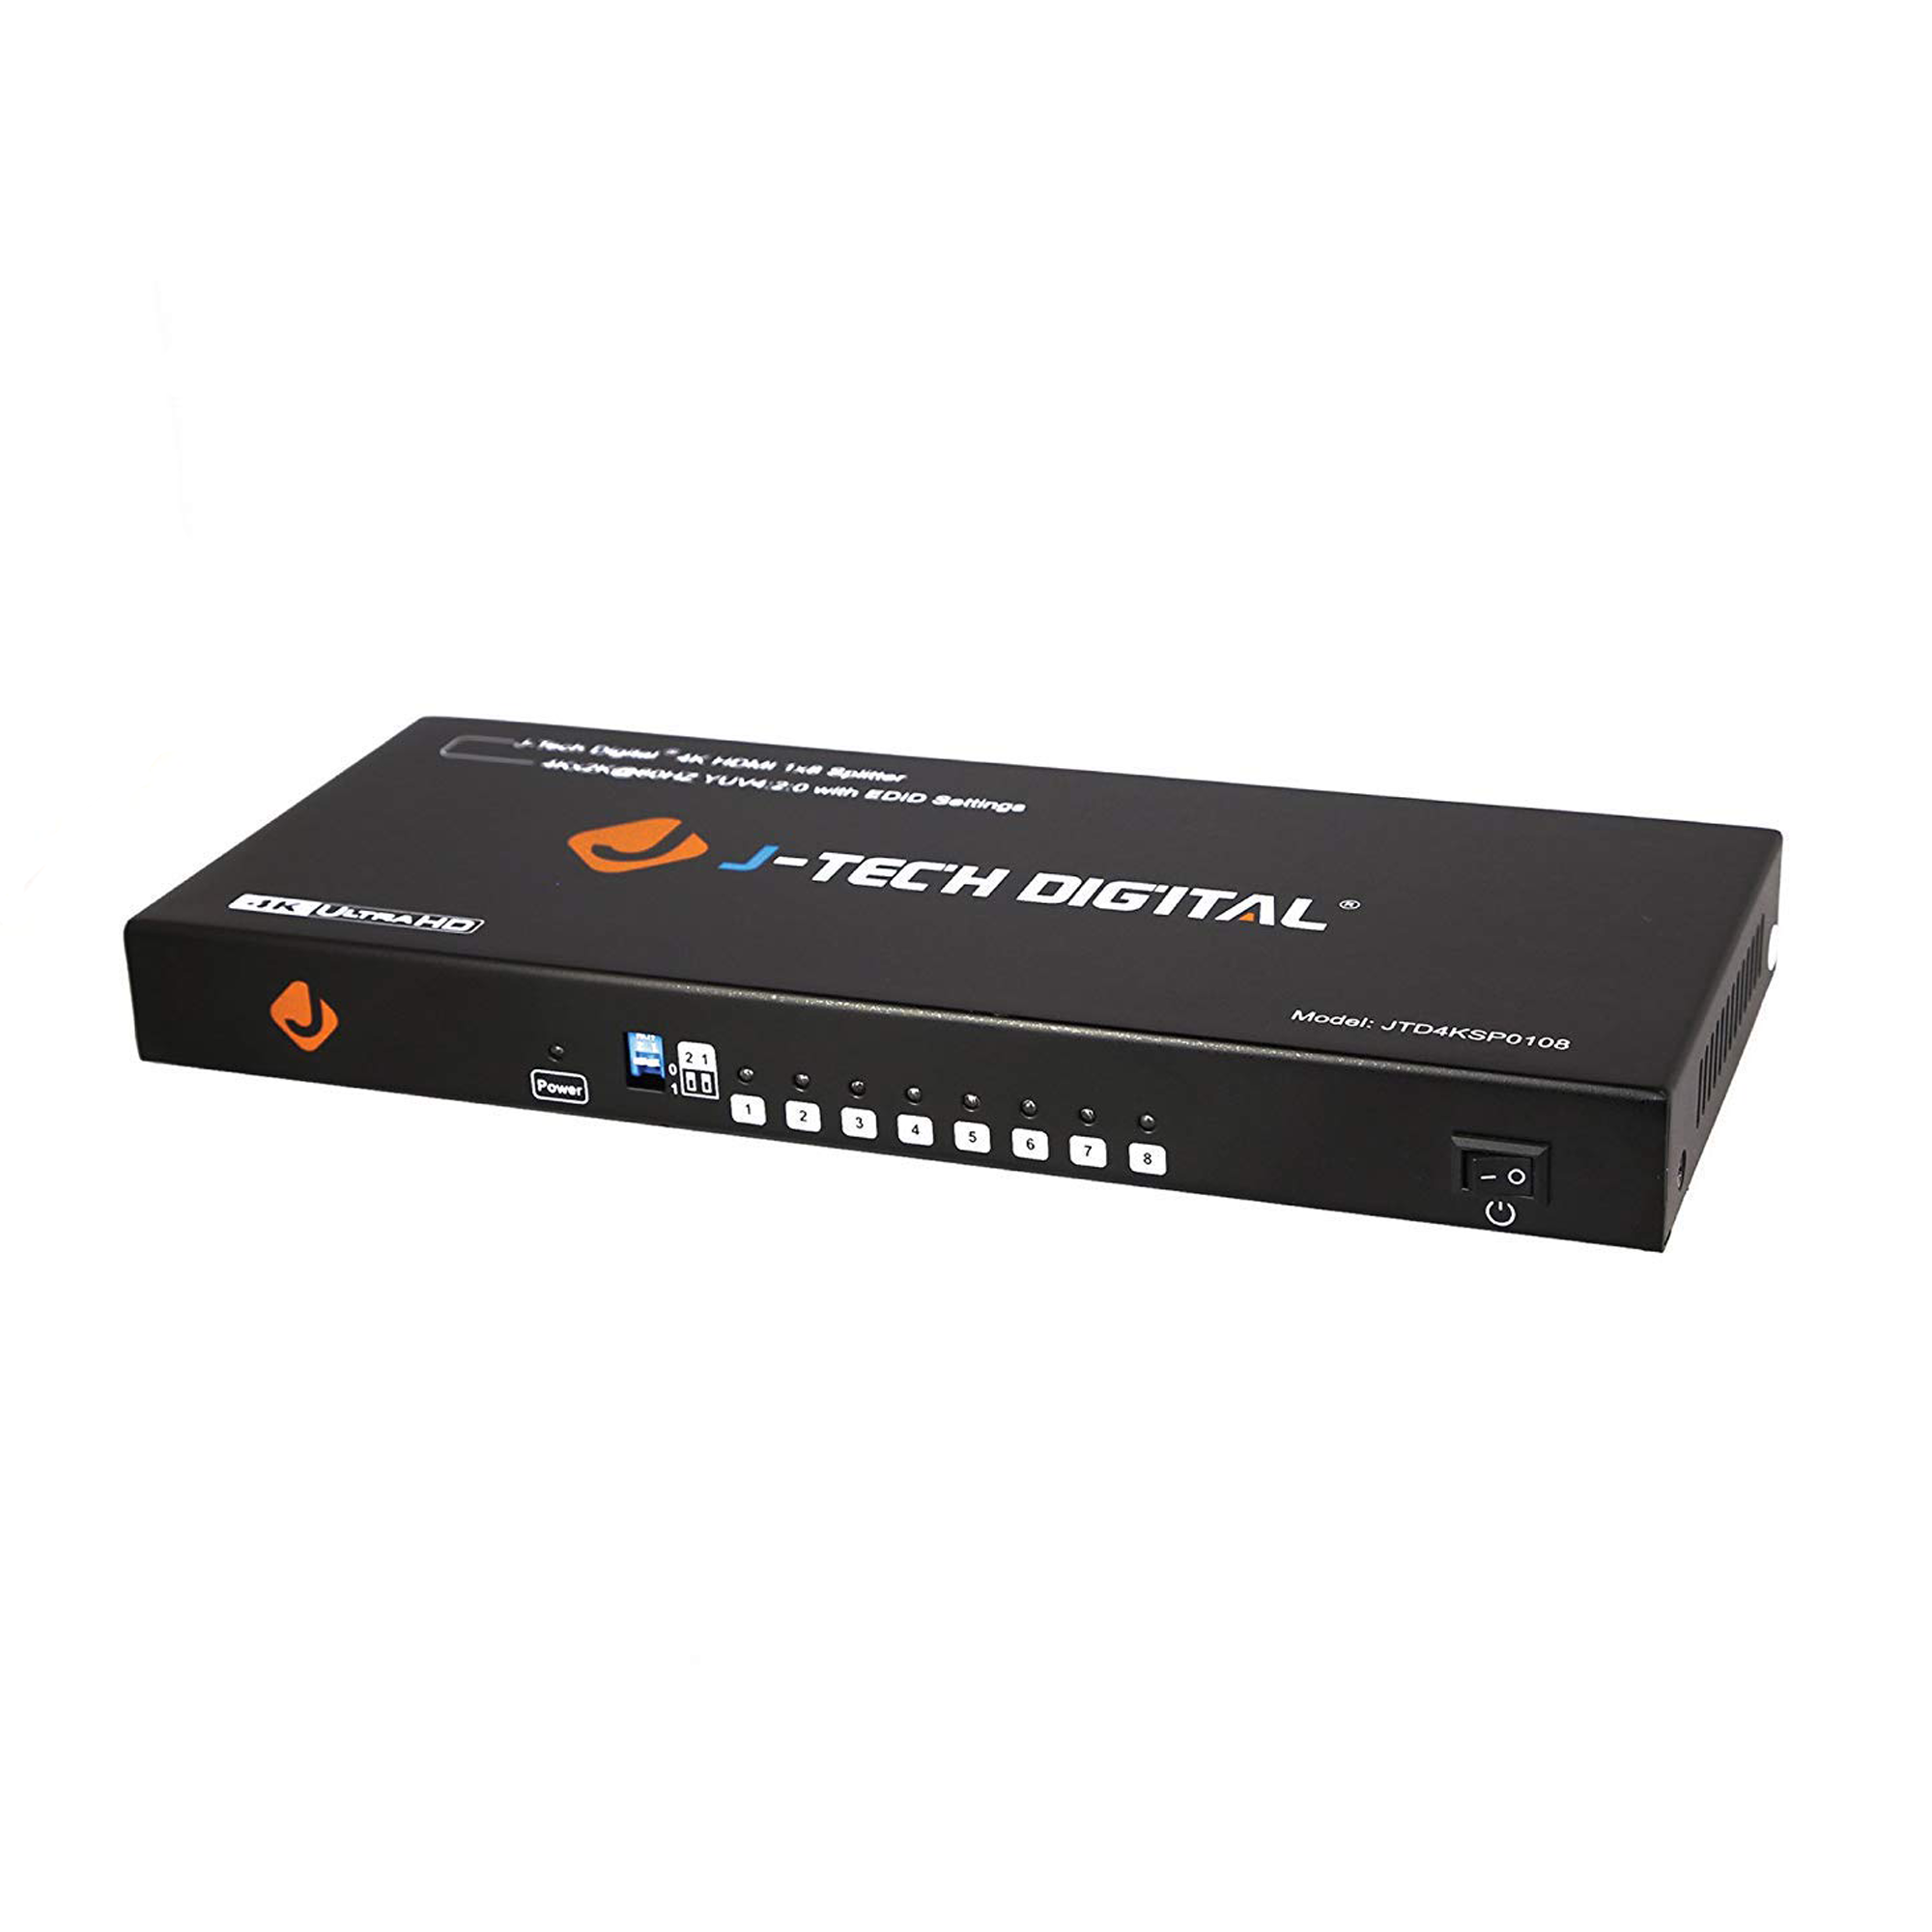 J-Tech Digital HD 4K 60HZ 1x8 HDMI Splitter High Resolutions 4K@60HZ 4:2:0 Full HD, Full 3D [JTD4KSP0108] - image 1 of 6